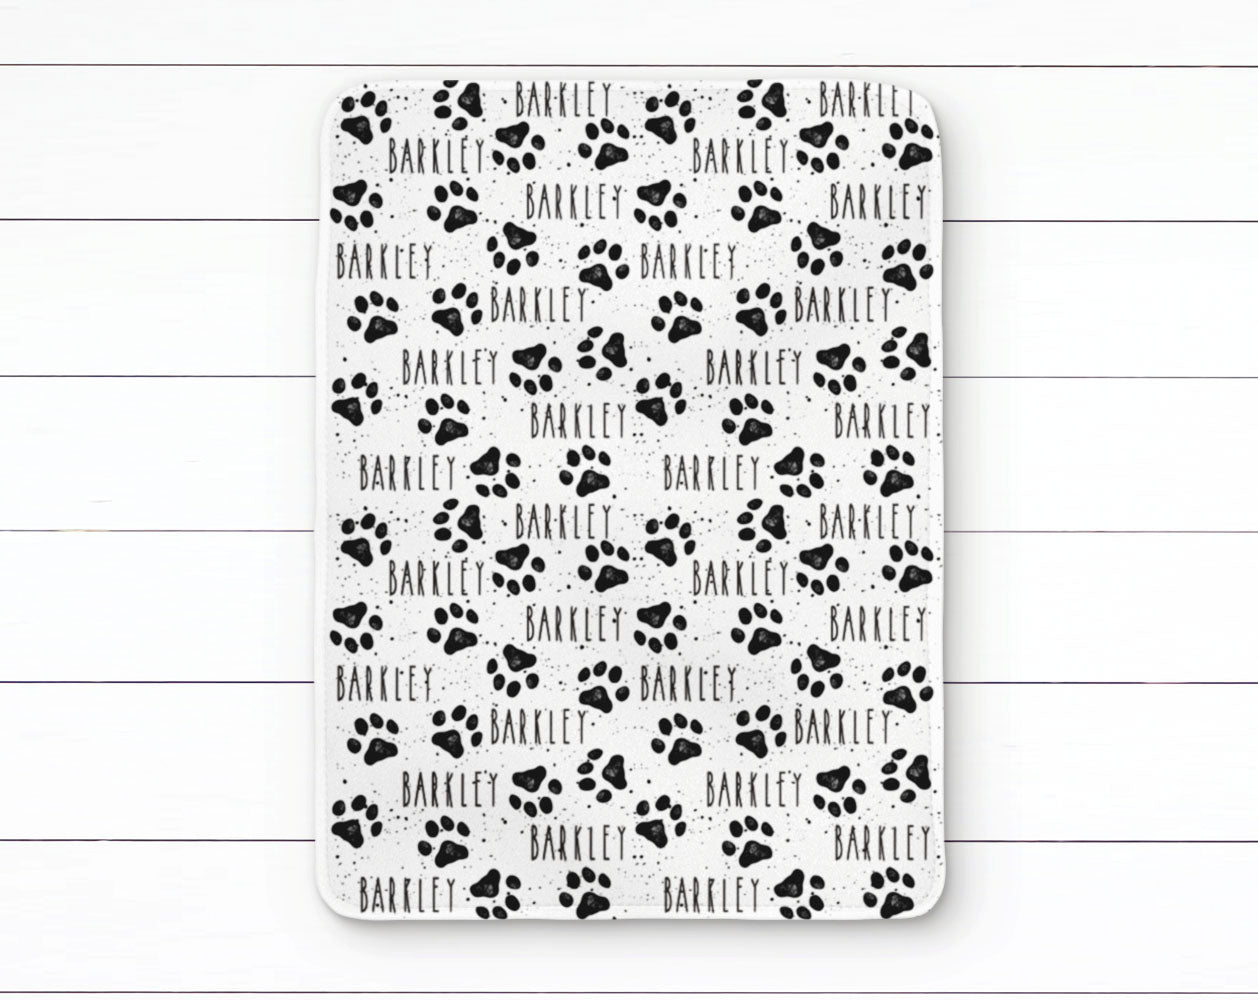 Dog Petting Chart Print on Canvas Funny Dog Print Dog Wall -  Finland